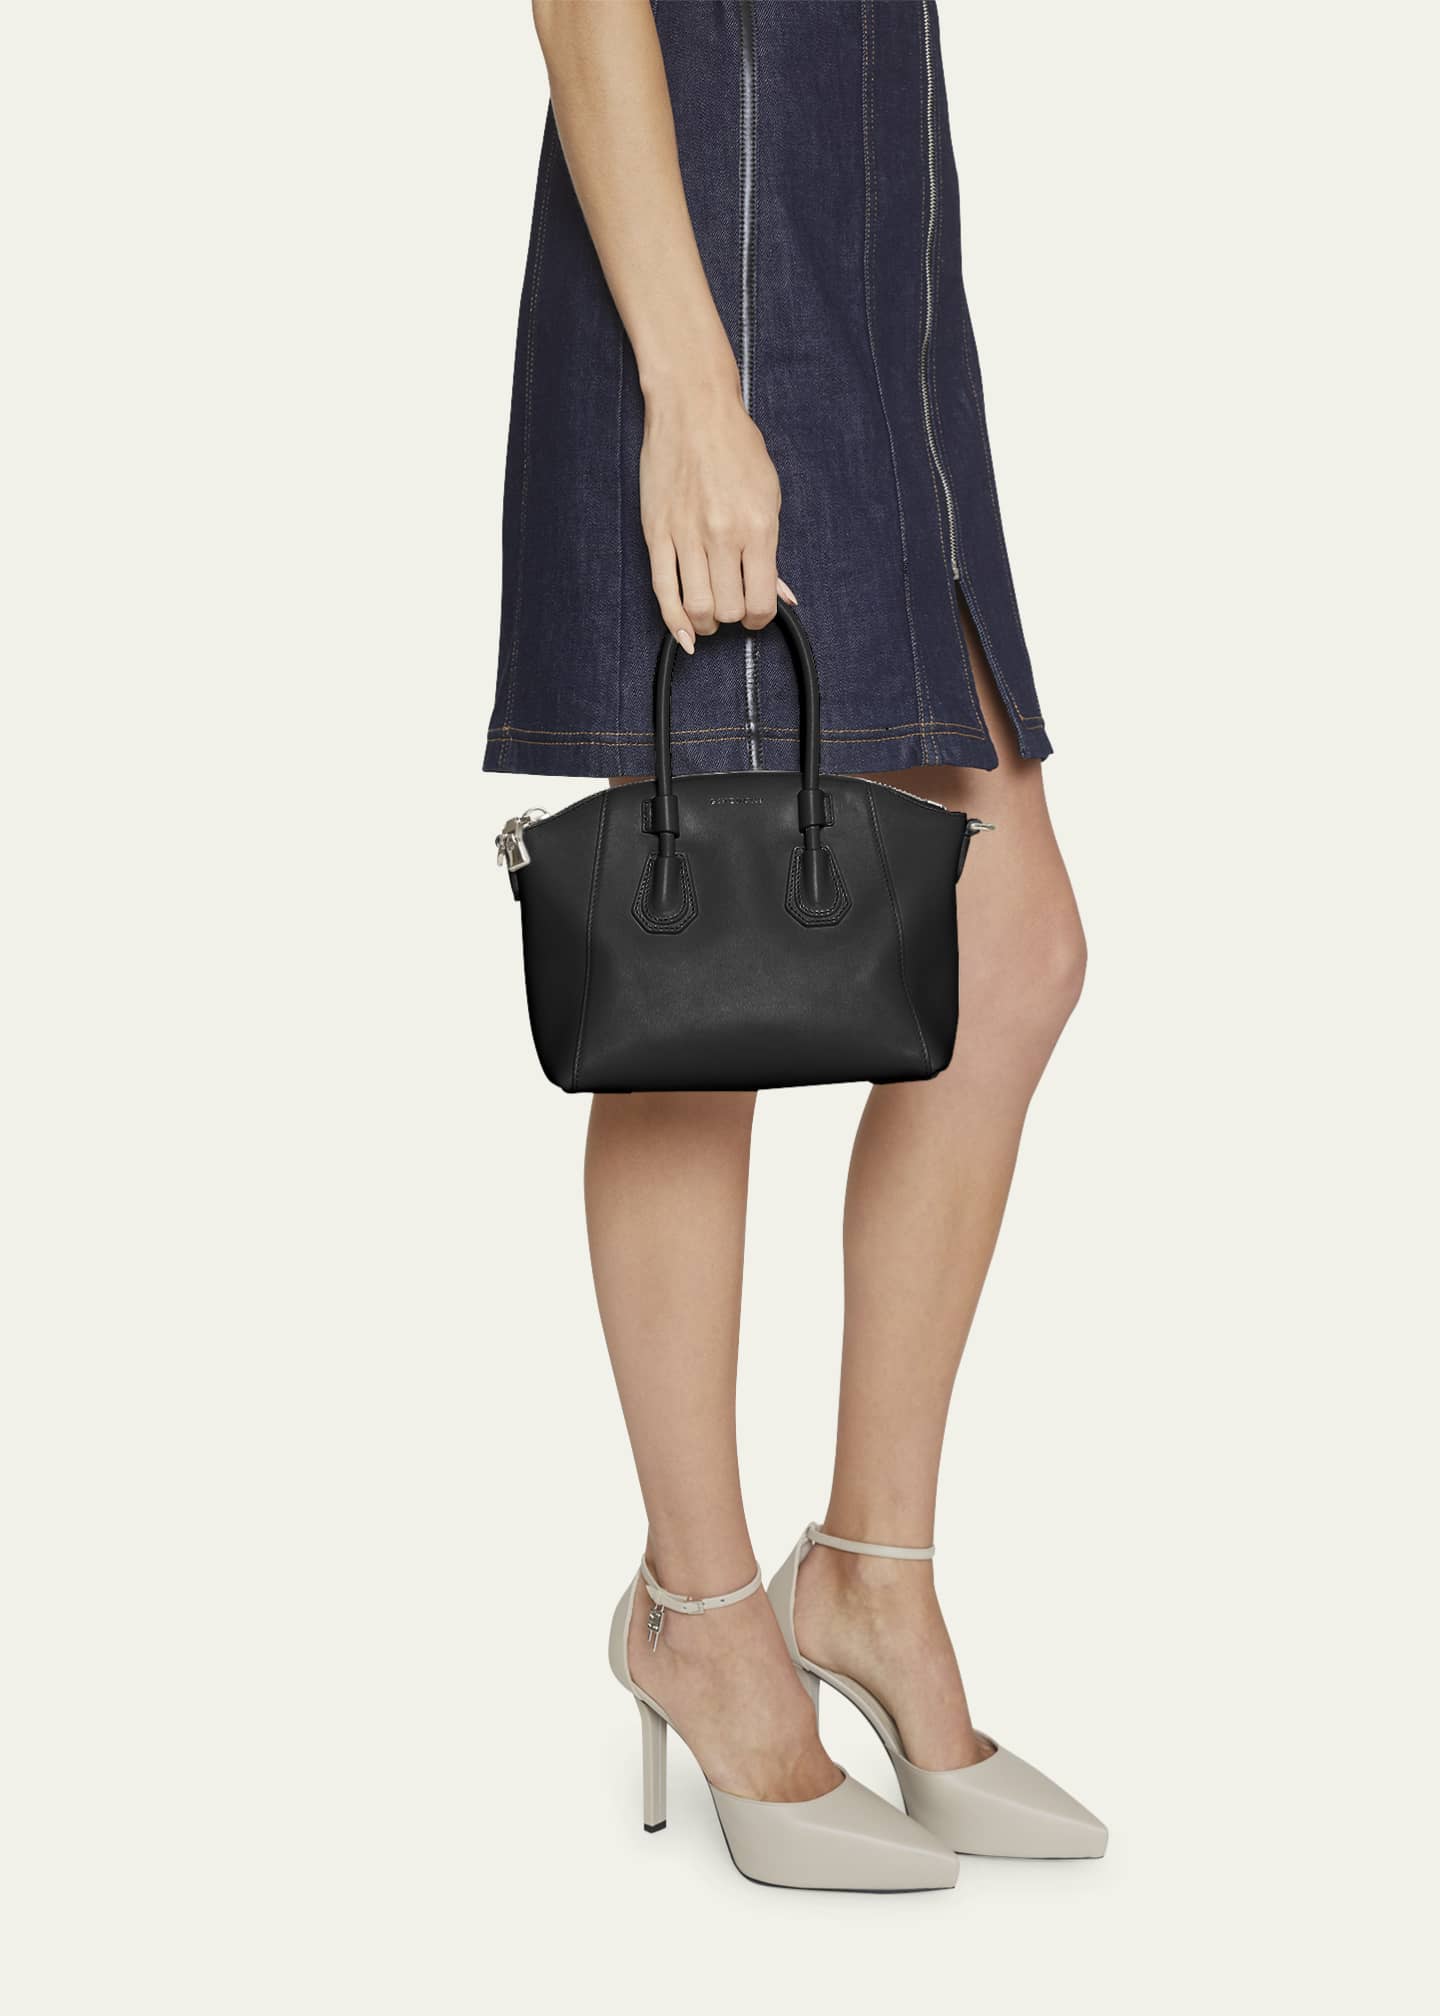 Women's Antigona Mini Bag, GIVENCHY